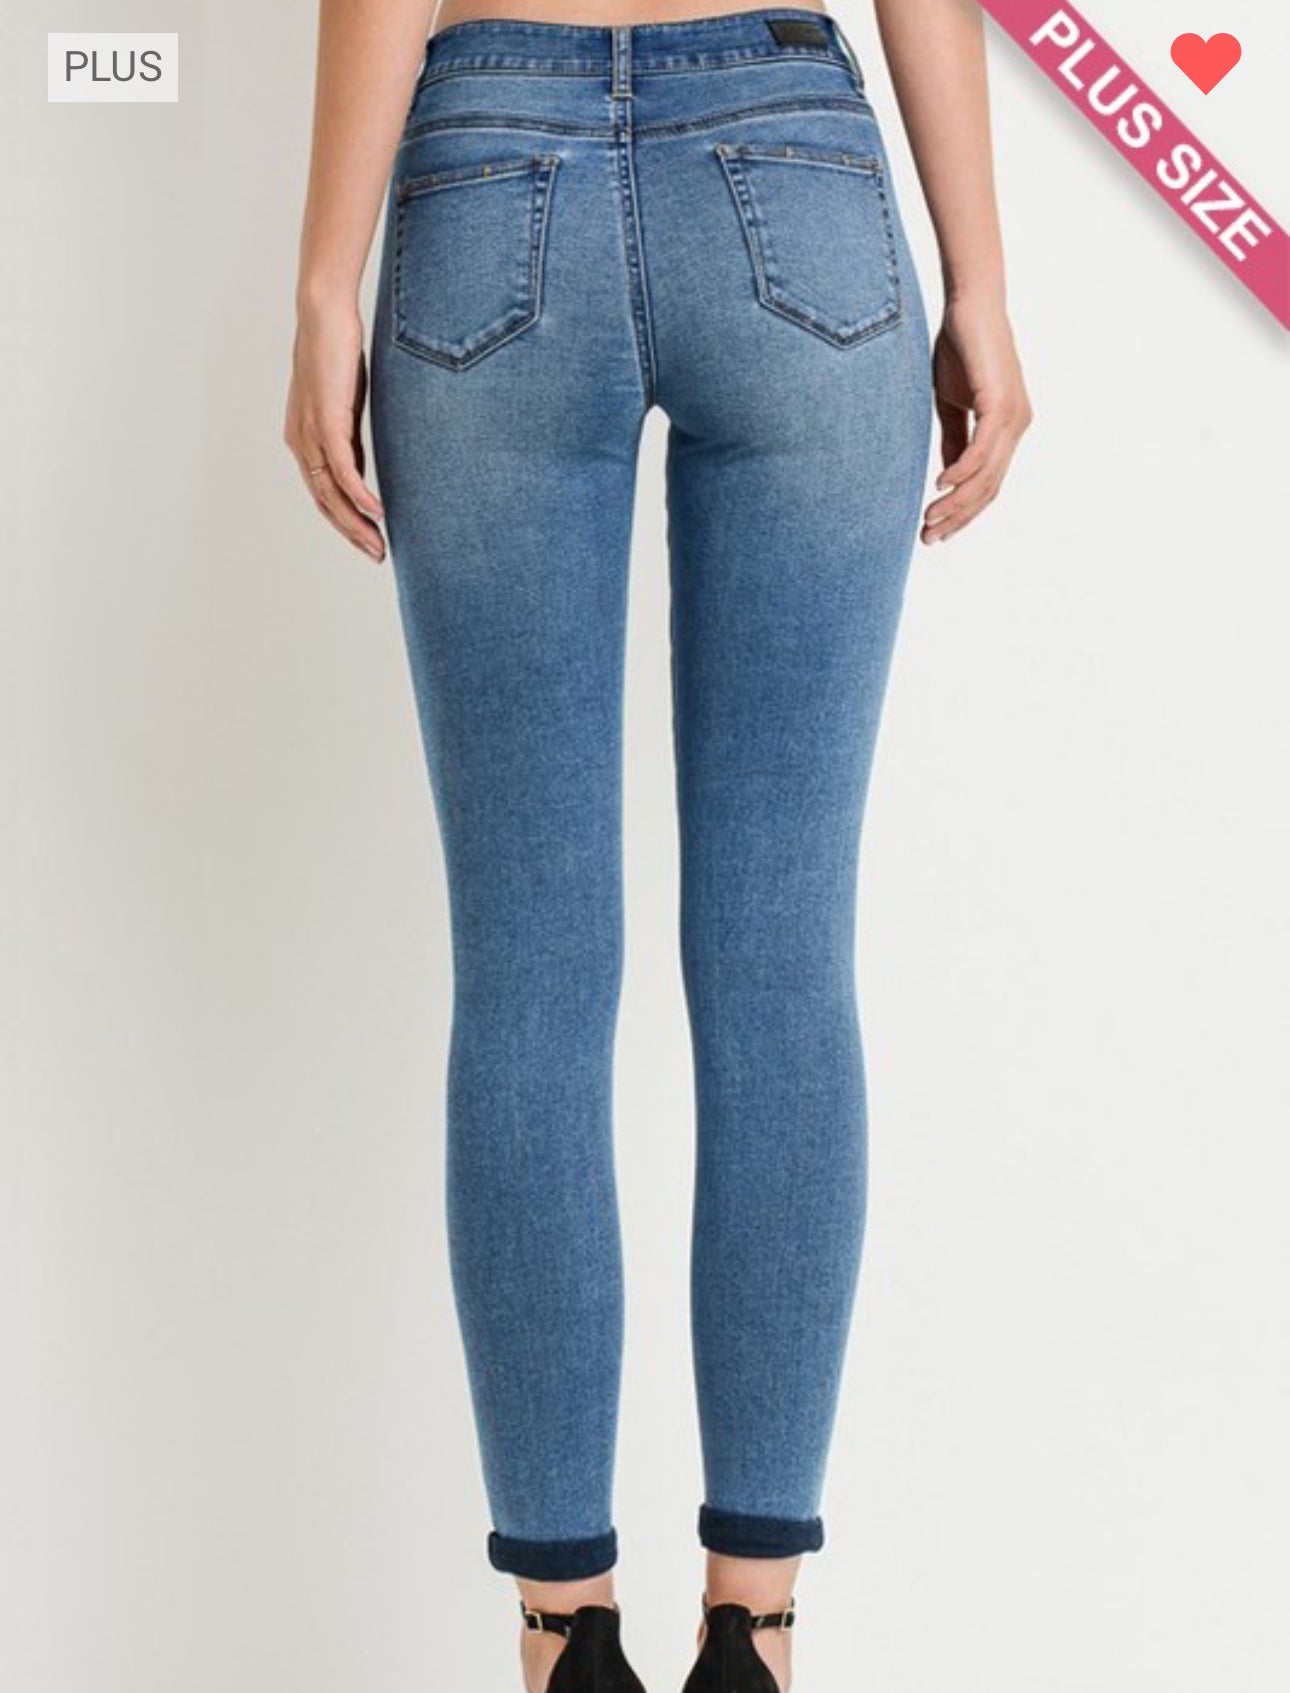 Jenny | Medium Blue Skinny Jeans